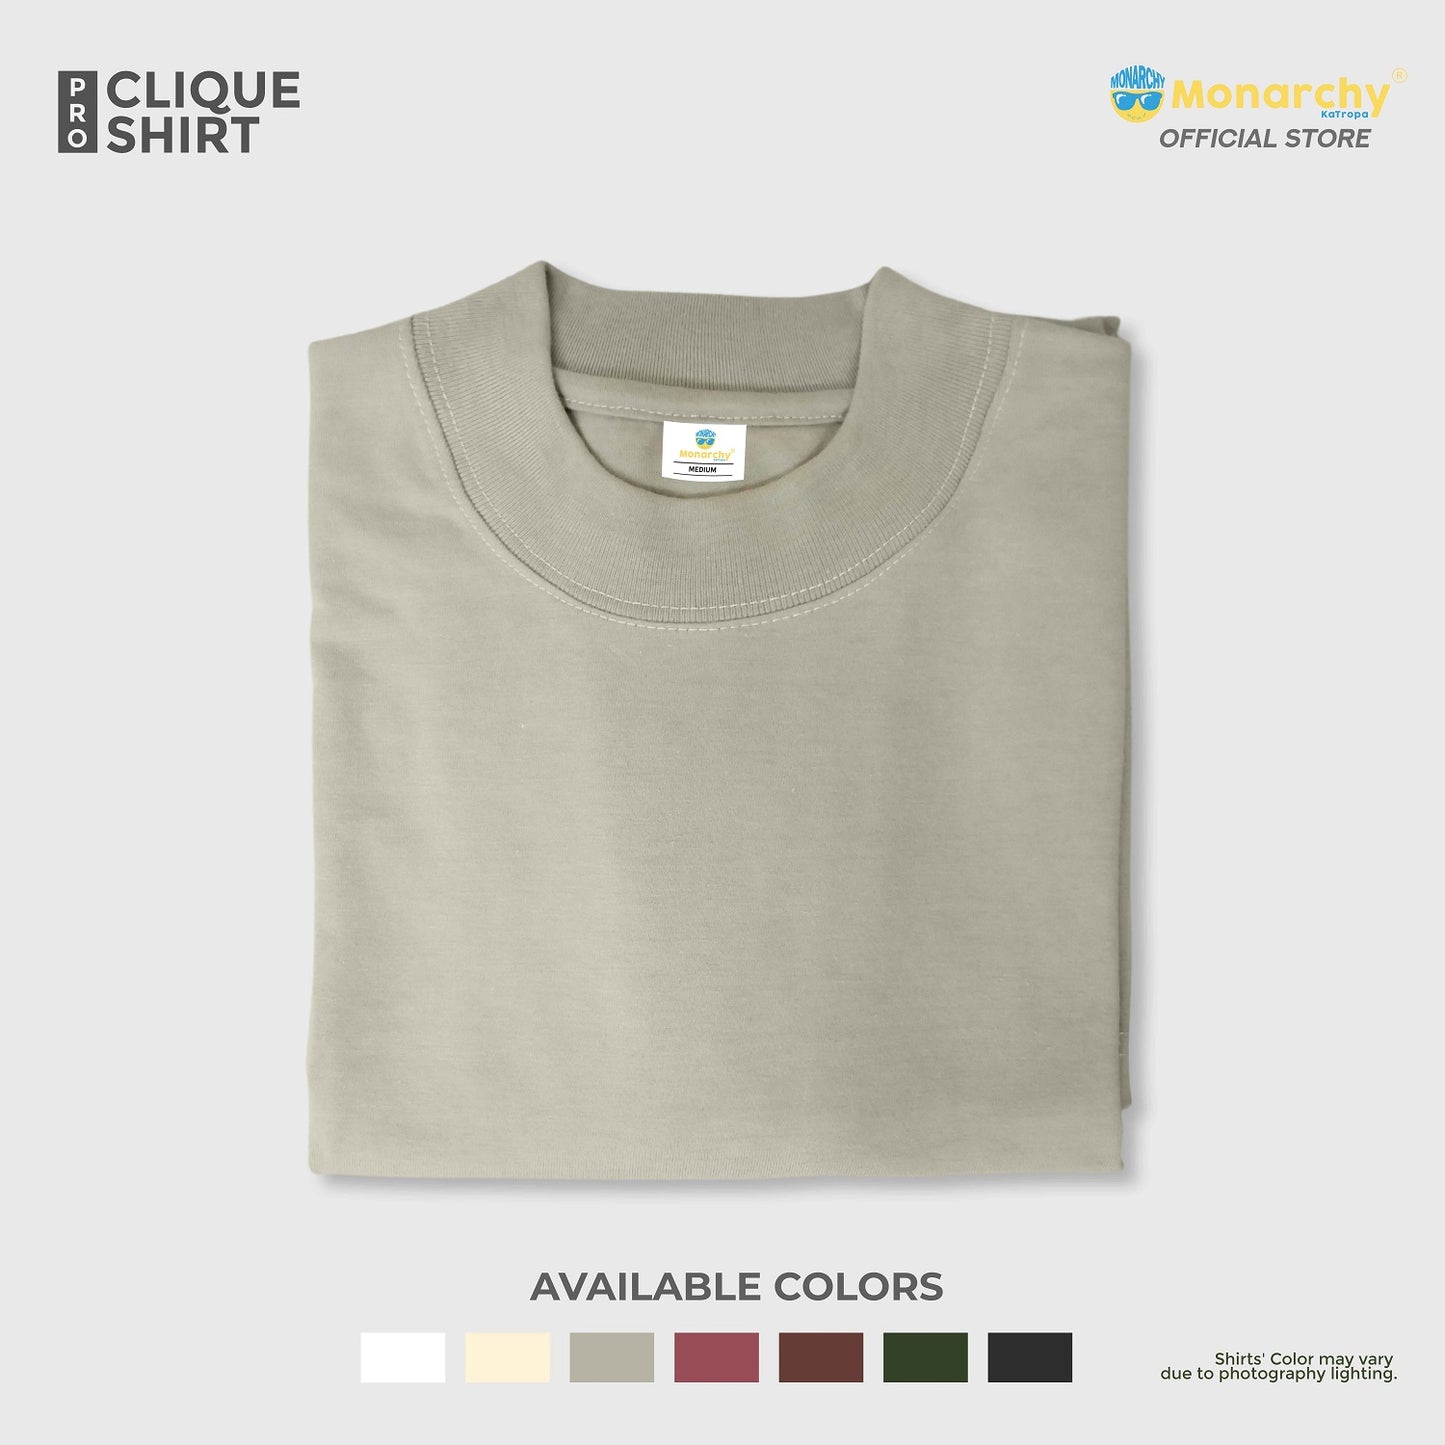 Monarchy Official Pro Clique Shirt for Men and Women | Unisex t-Shirts